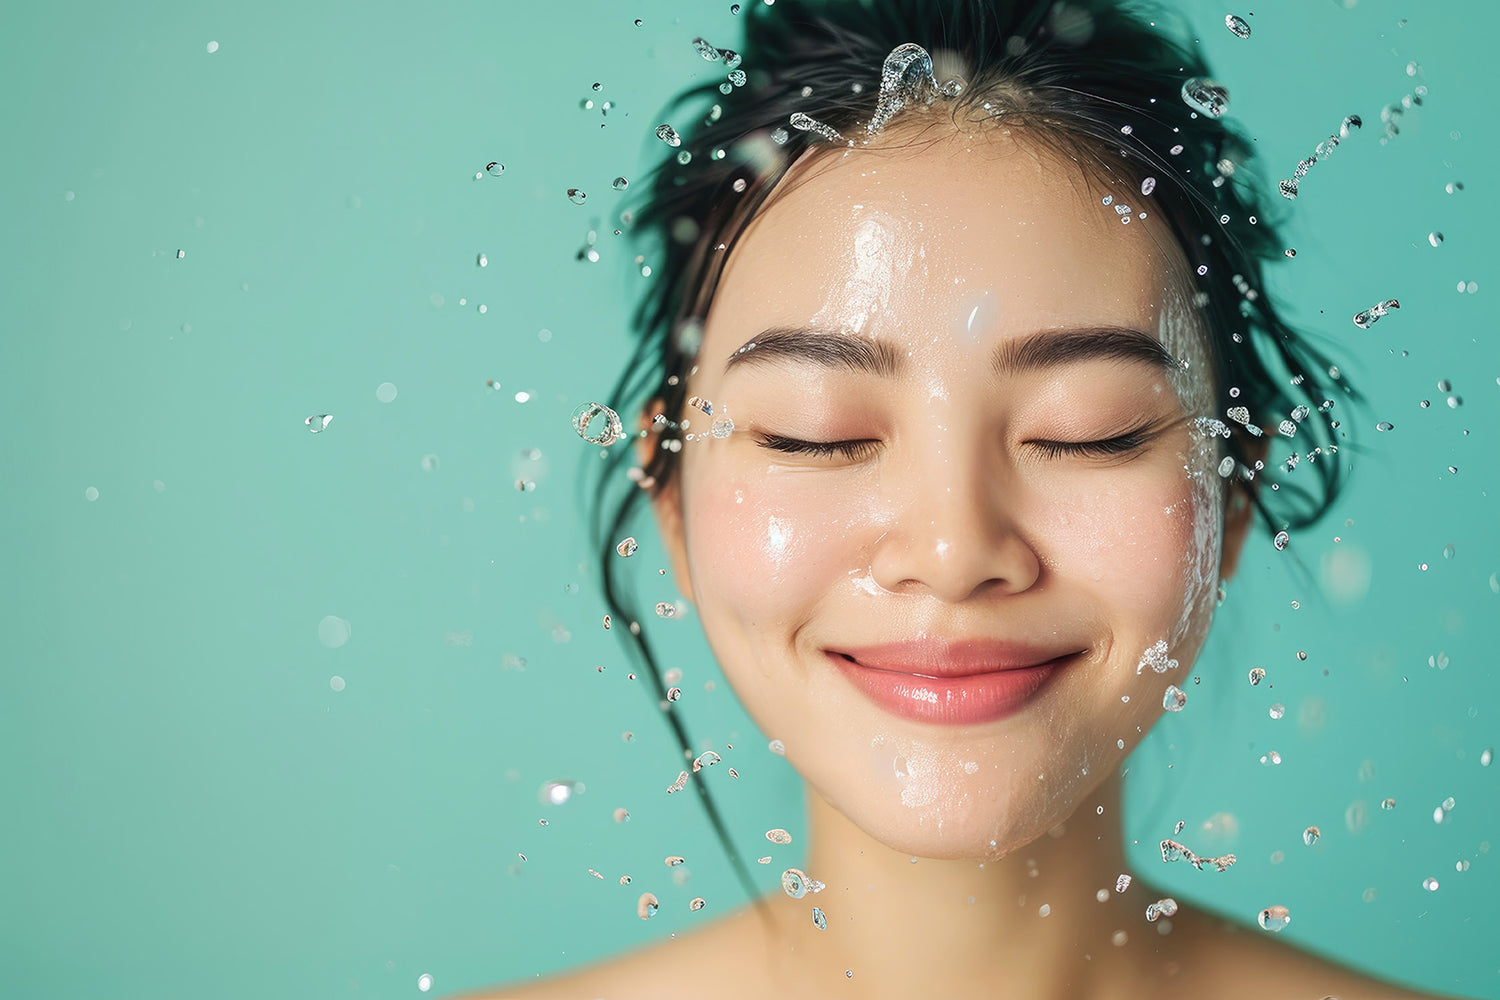 Understanding how to get healthy, moisturized skin